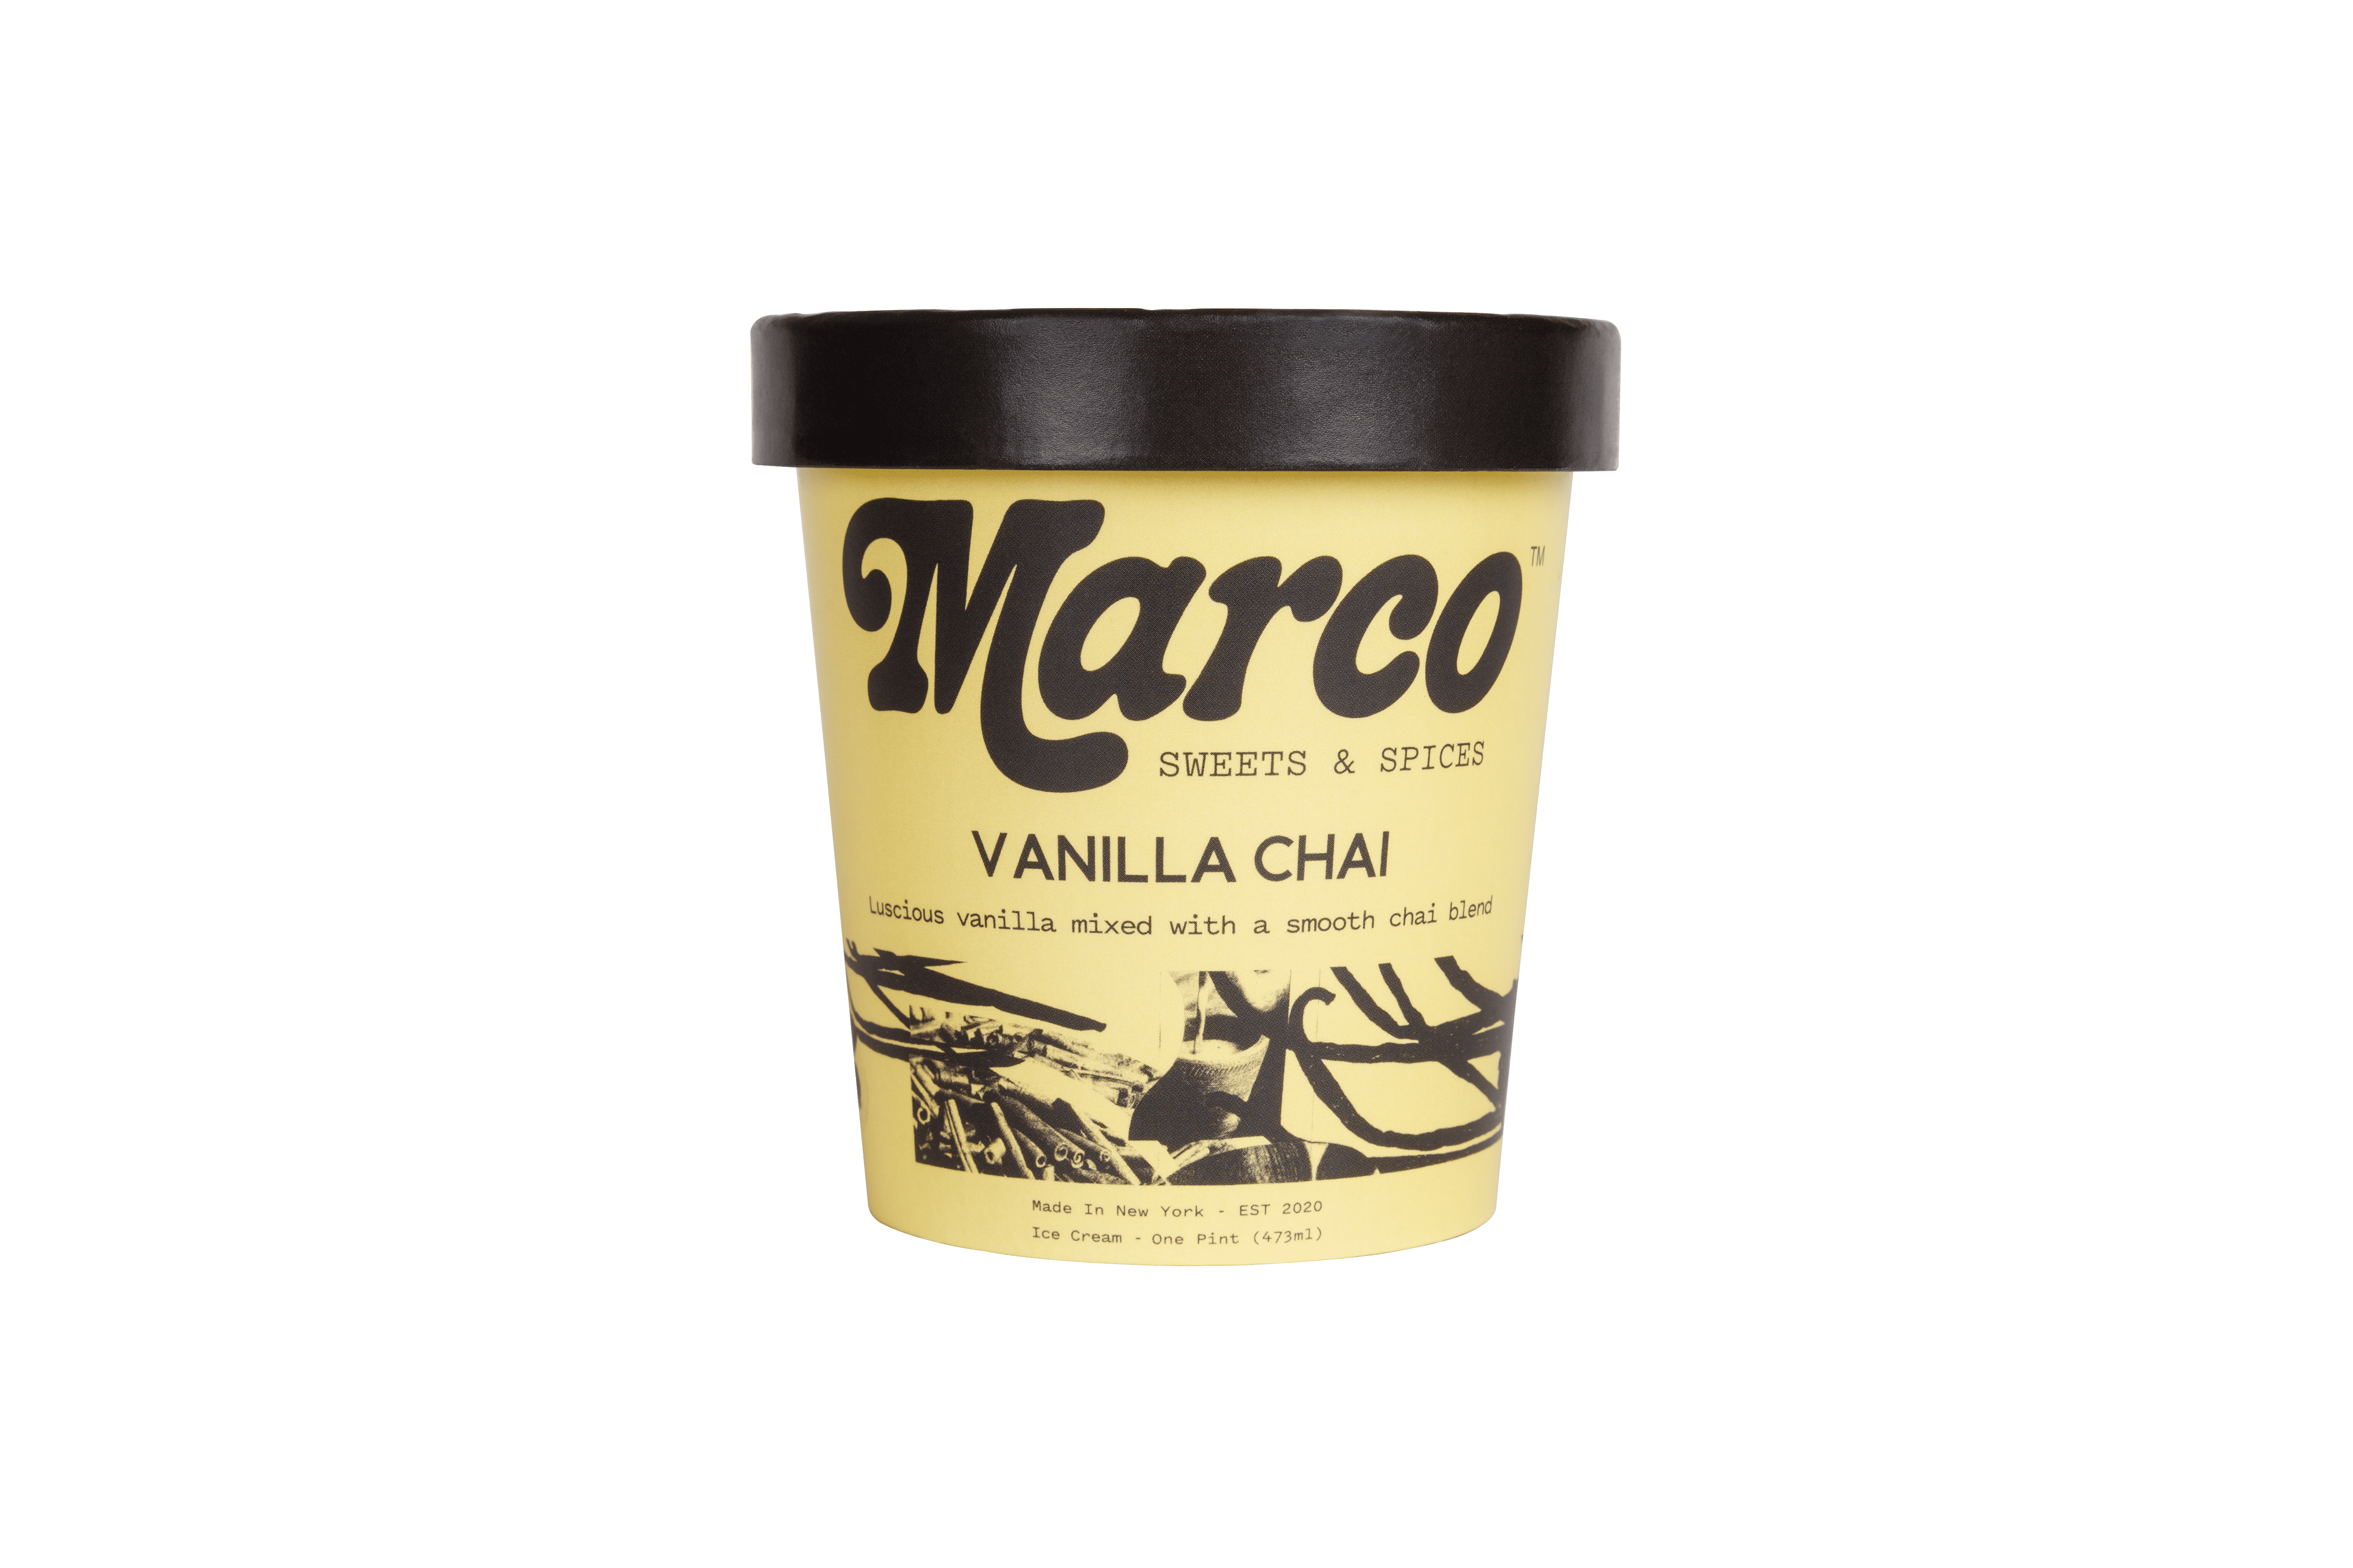 Marco Sweets Vanilla Chai Ice Cream Pint 8 units per case 16.0 oz